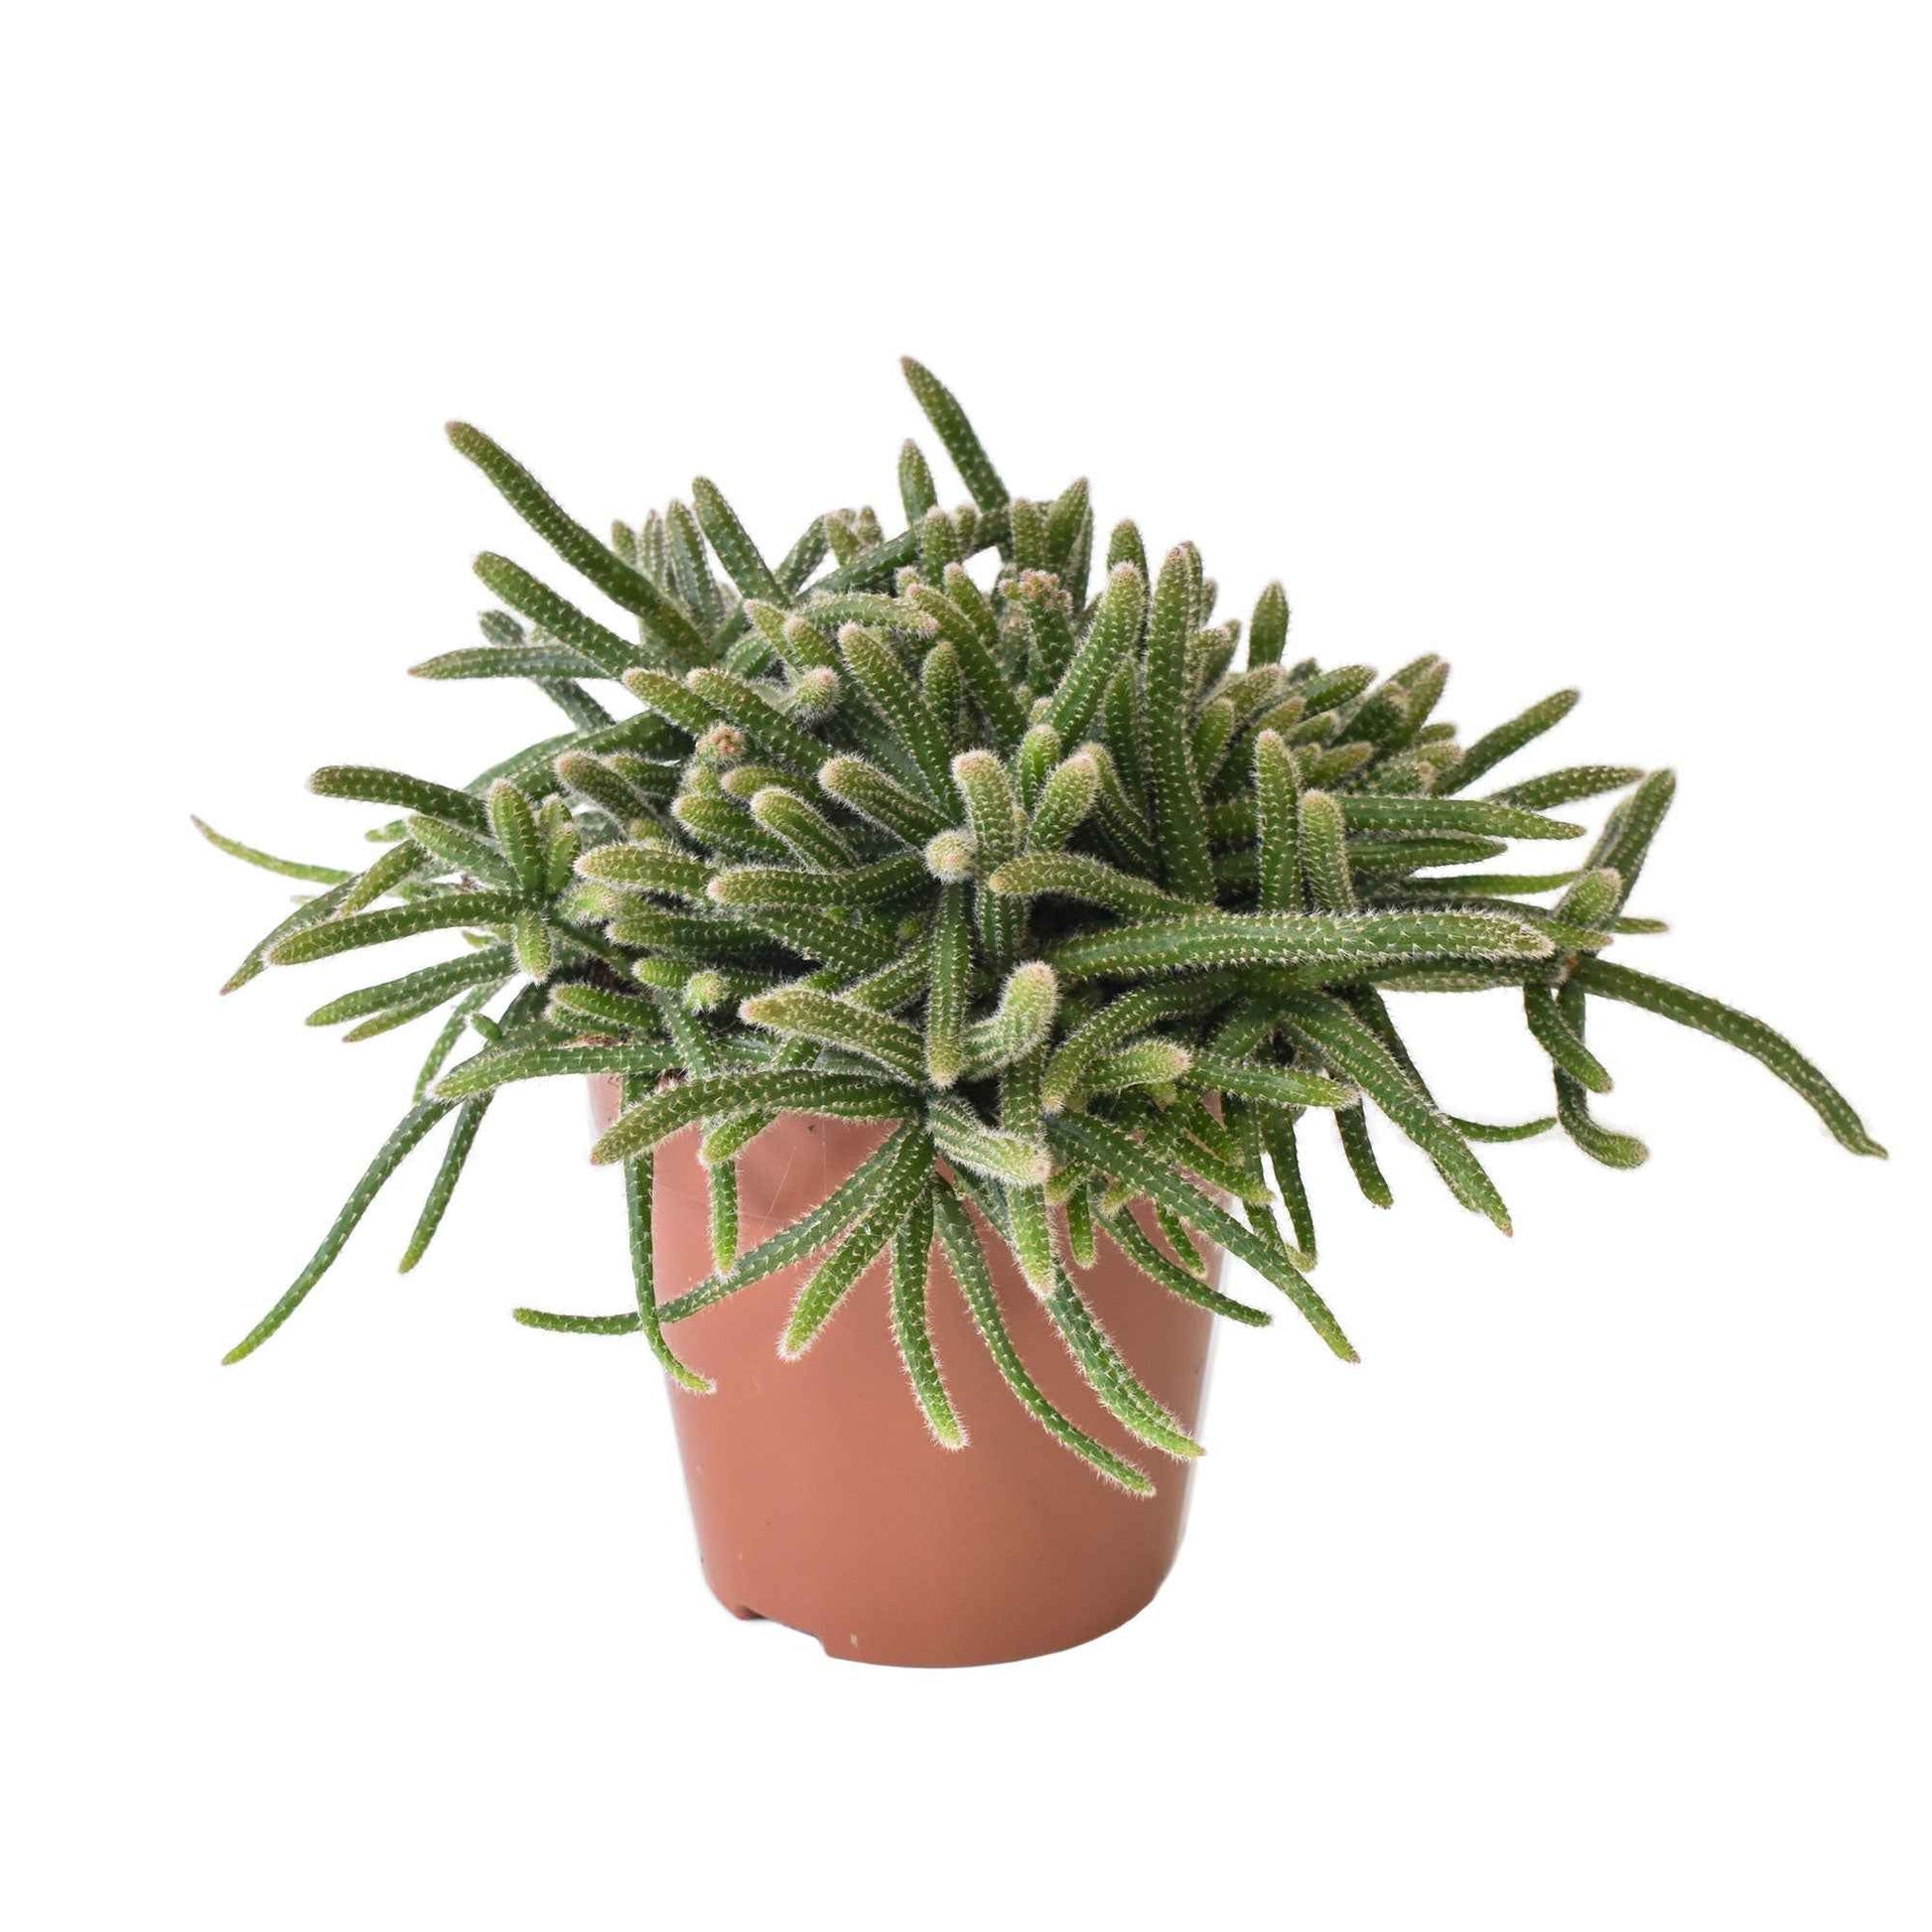 Koraalcactus Rhipsalis 'Horrida' - Alle makkelijke kamerplanten